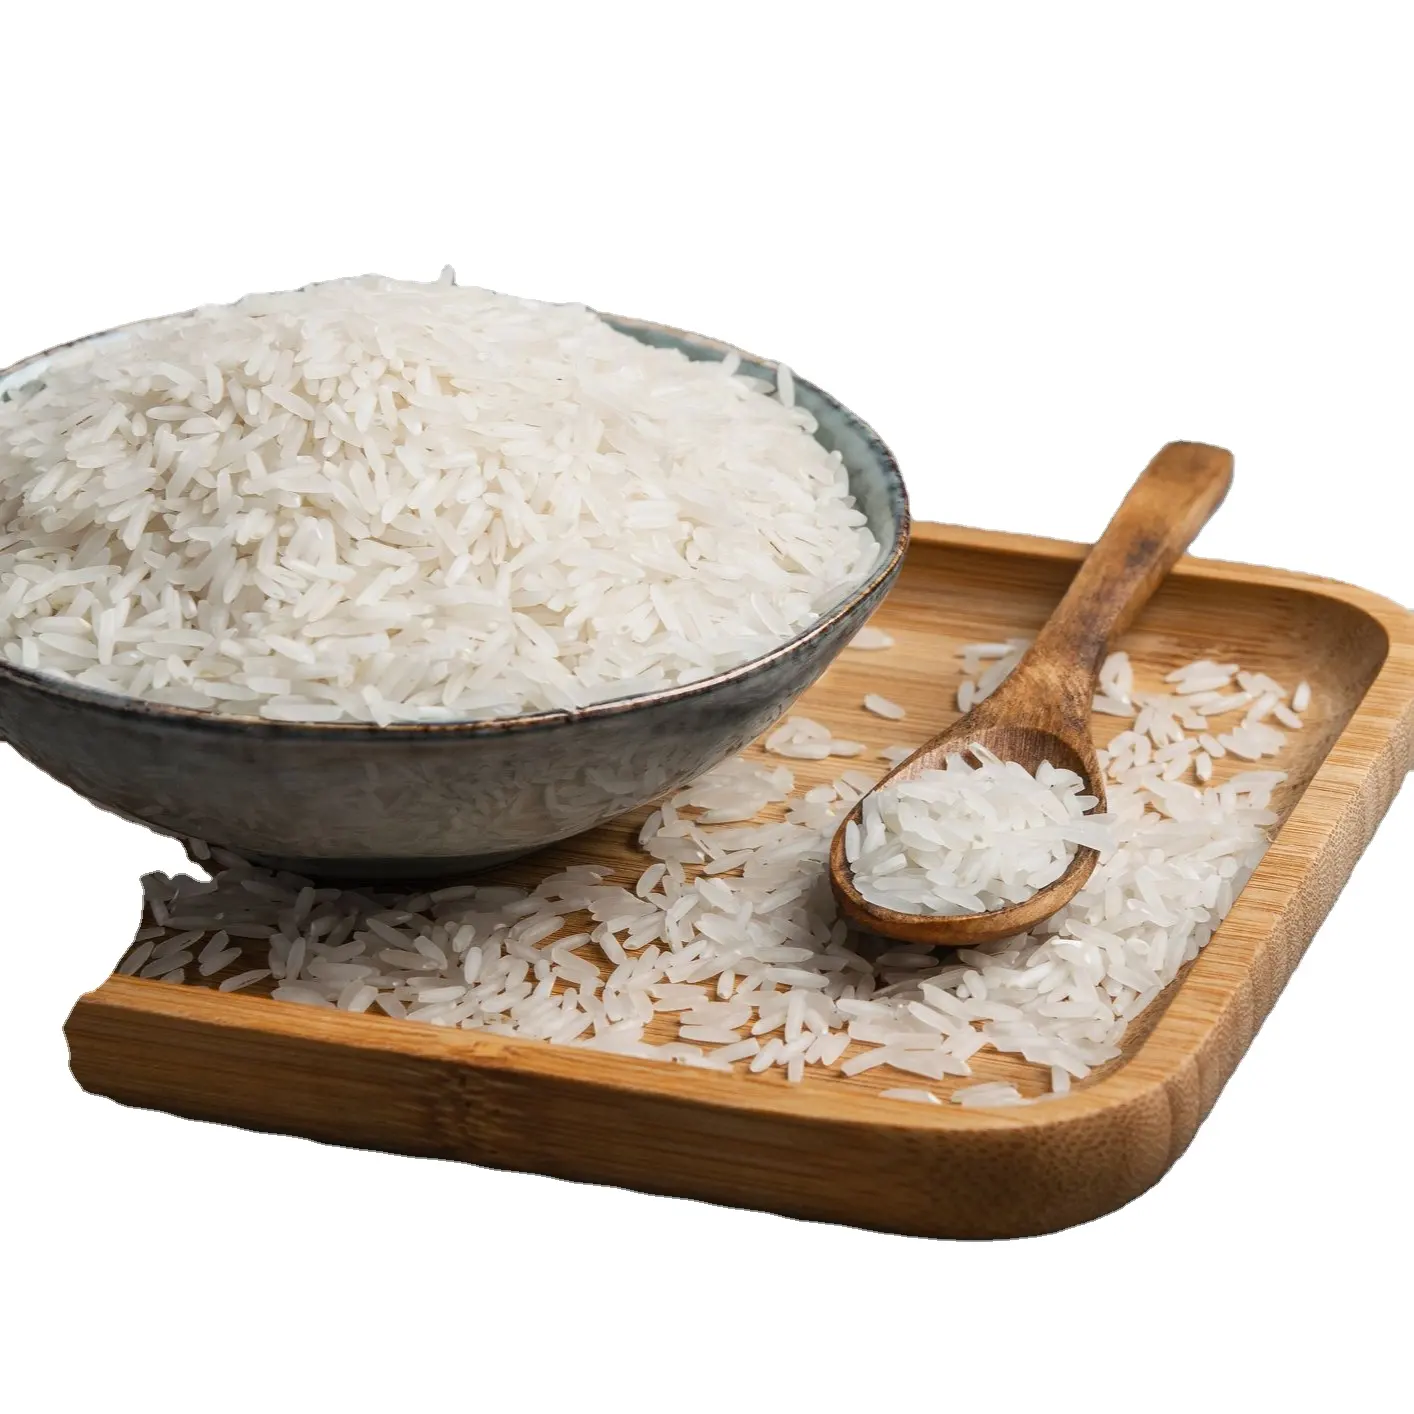 गर्म बेच प्रीमियम ग्रेड गुणवत्ता थोक मात्रा स्वादिष्ट सुपर बासमती चावल